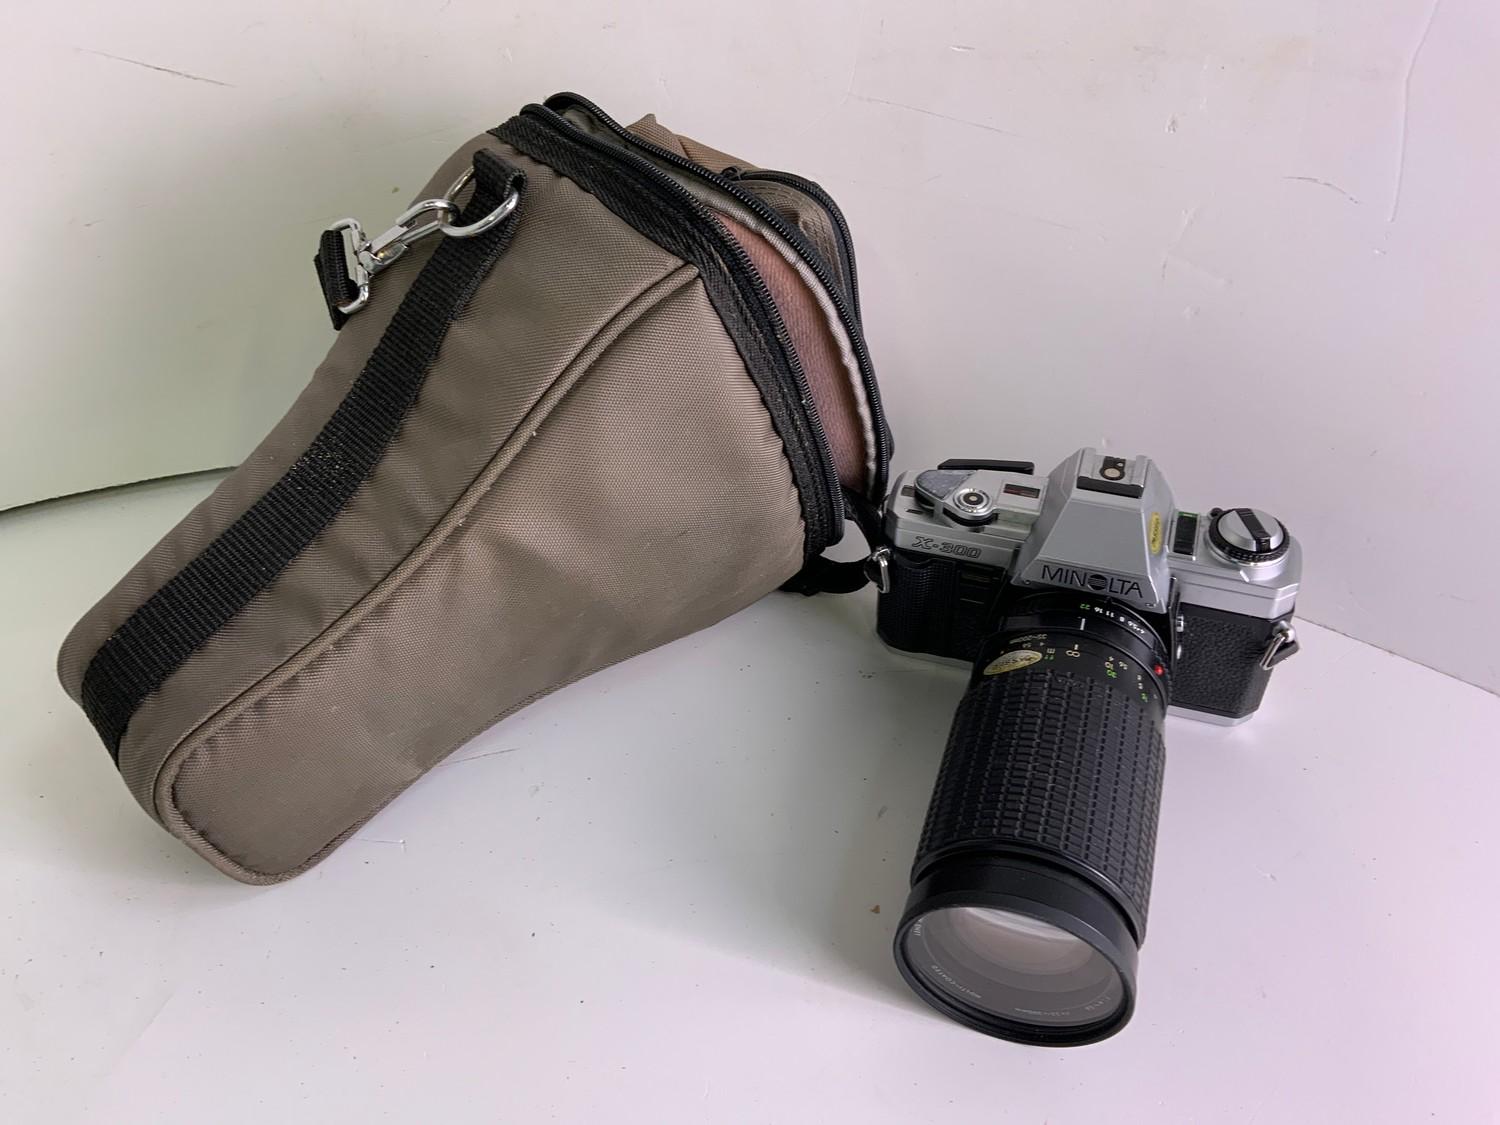 Minolta Camera in Bag